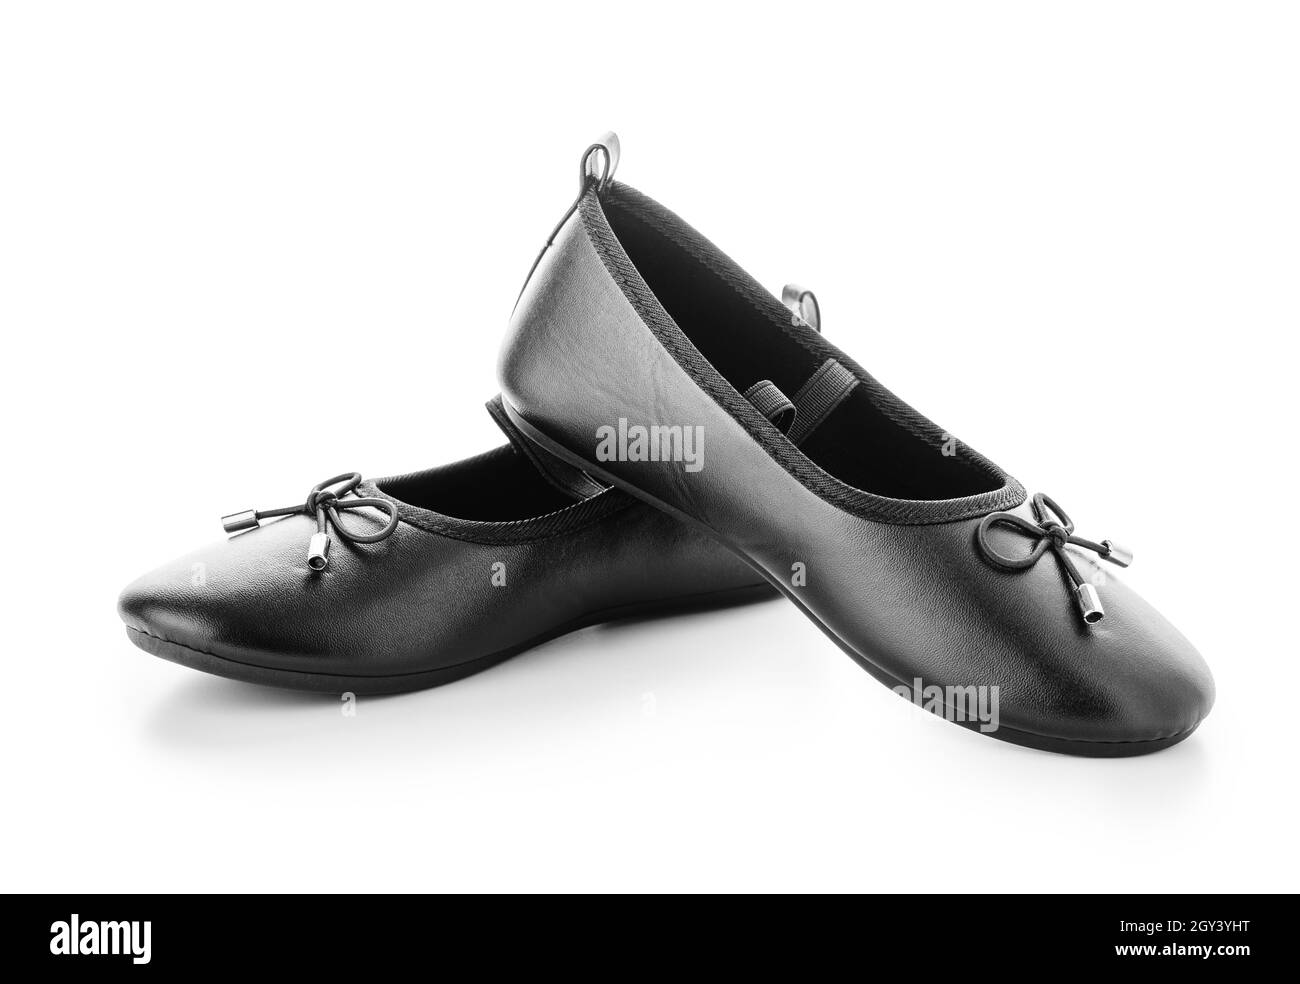 Gimnasta vagón cuenca Zapatos negros para aprender a bailar Fotografía de stock - Alamy